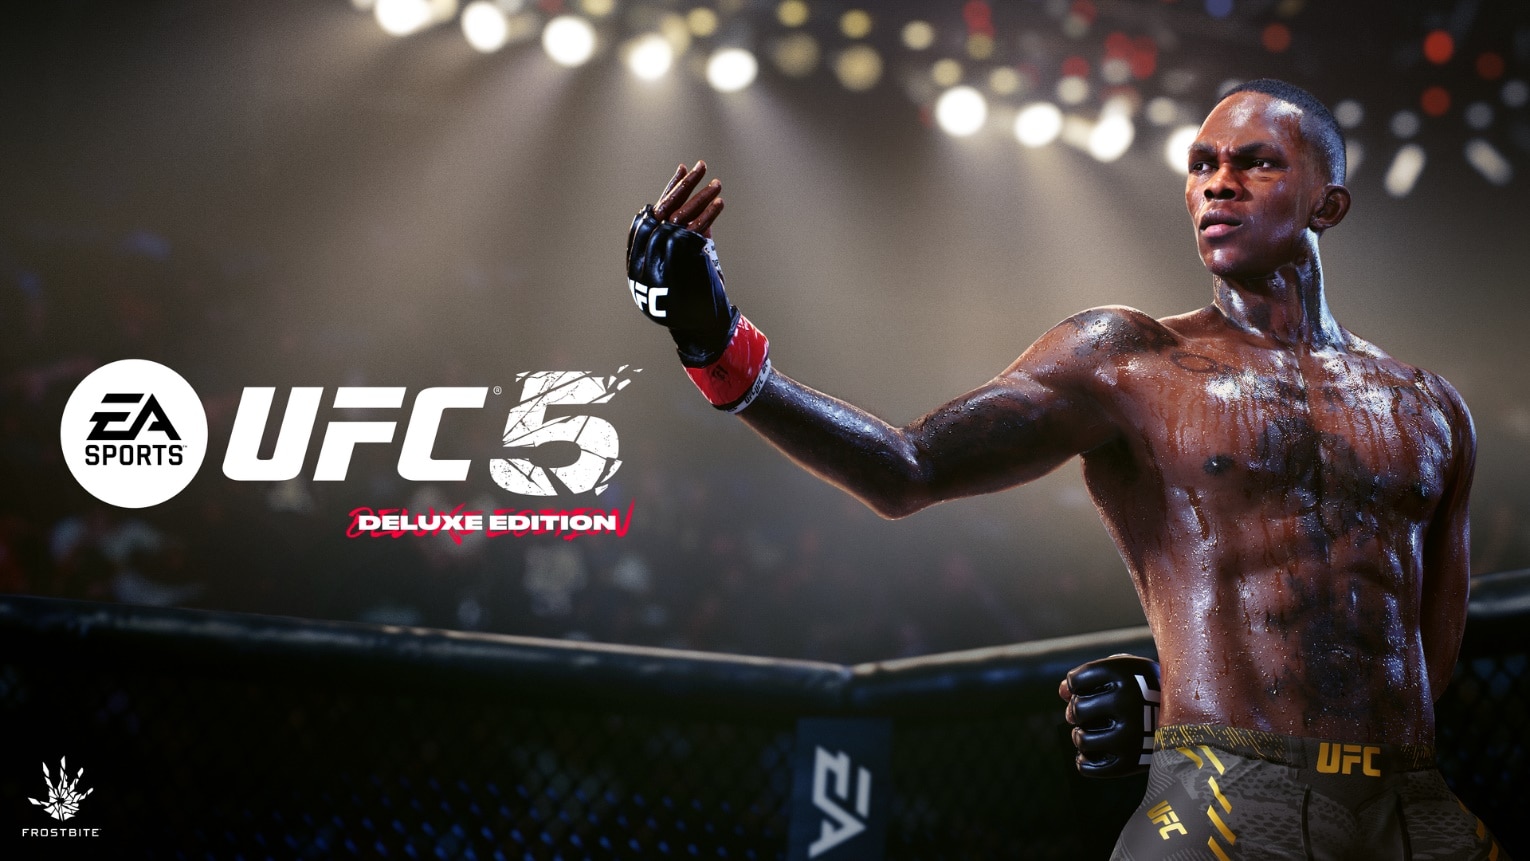 EA UFC 5 release